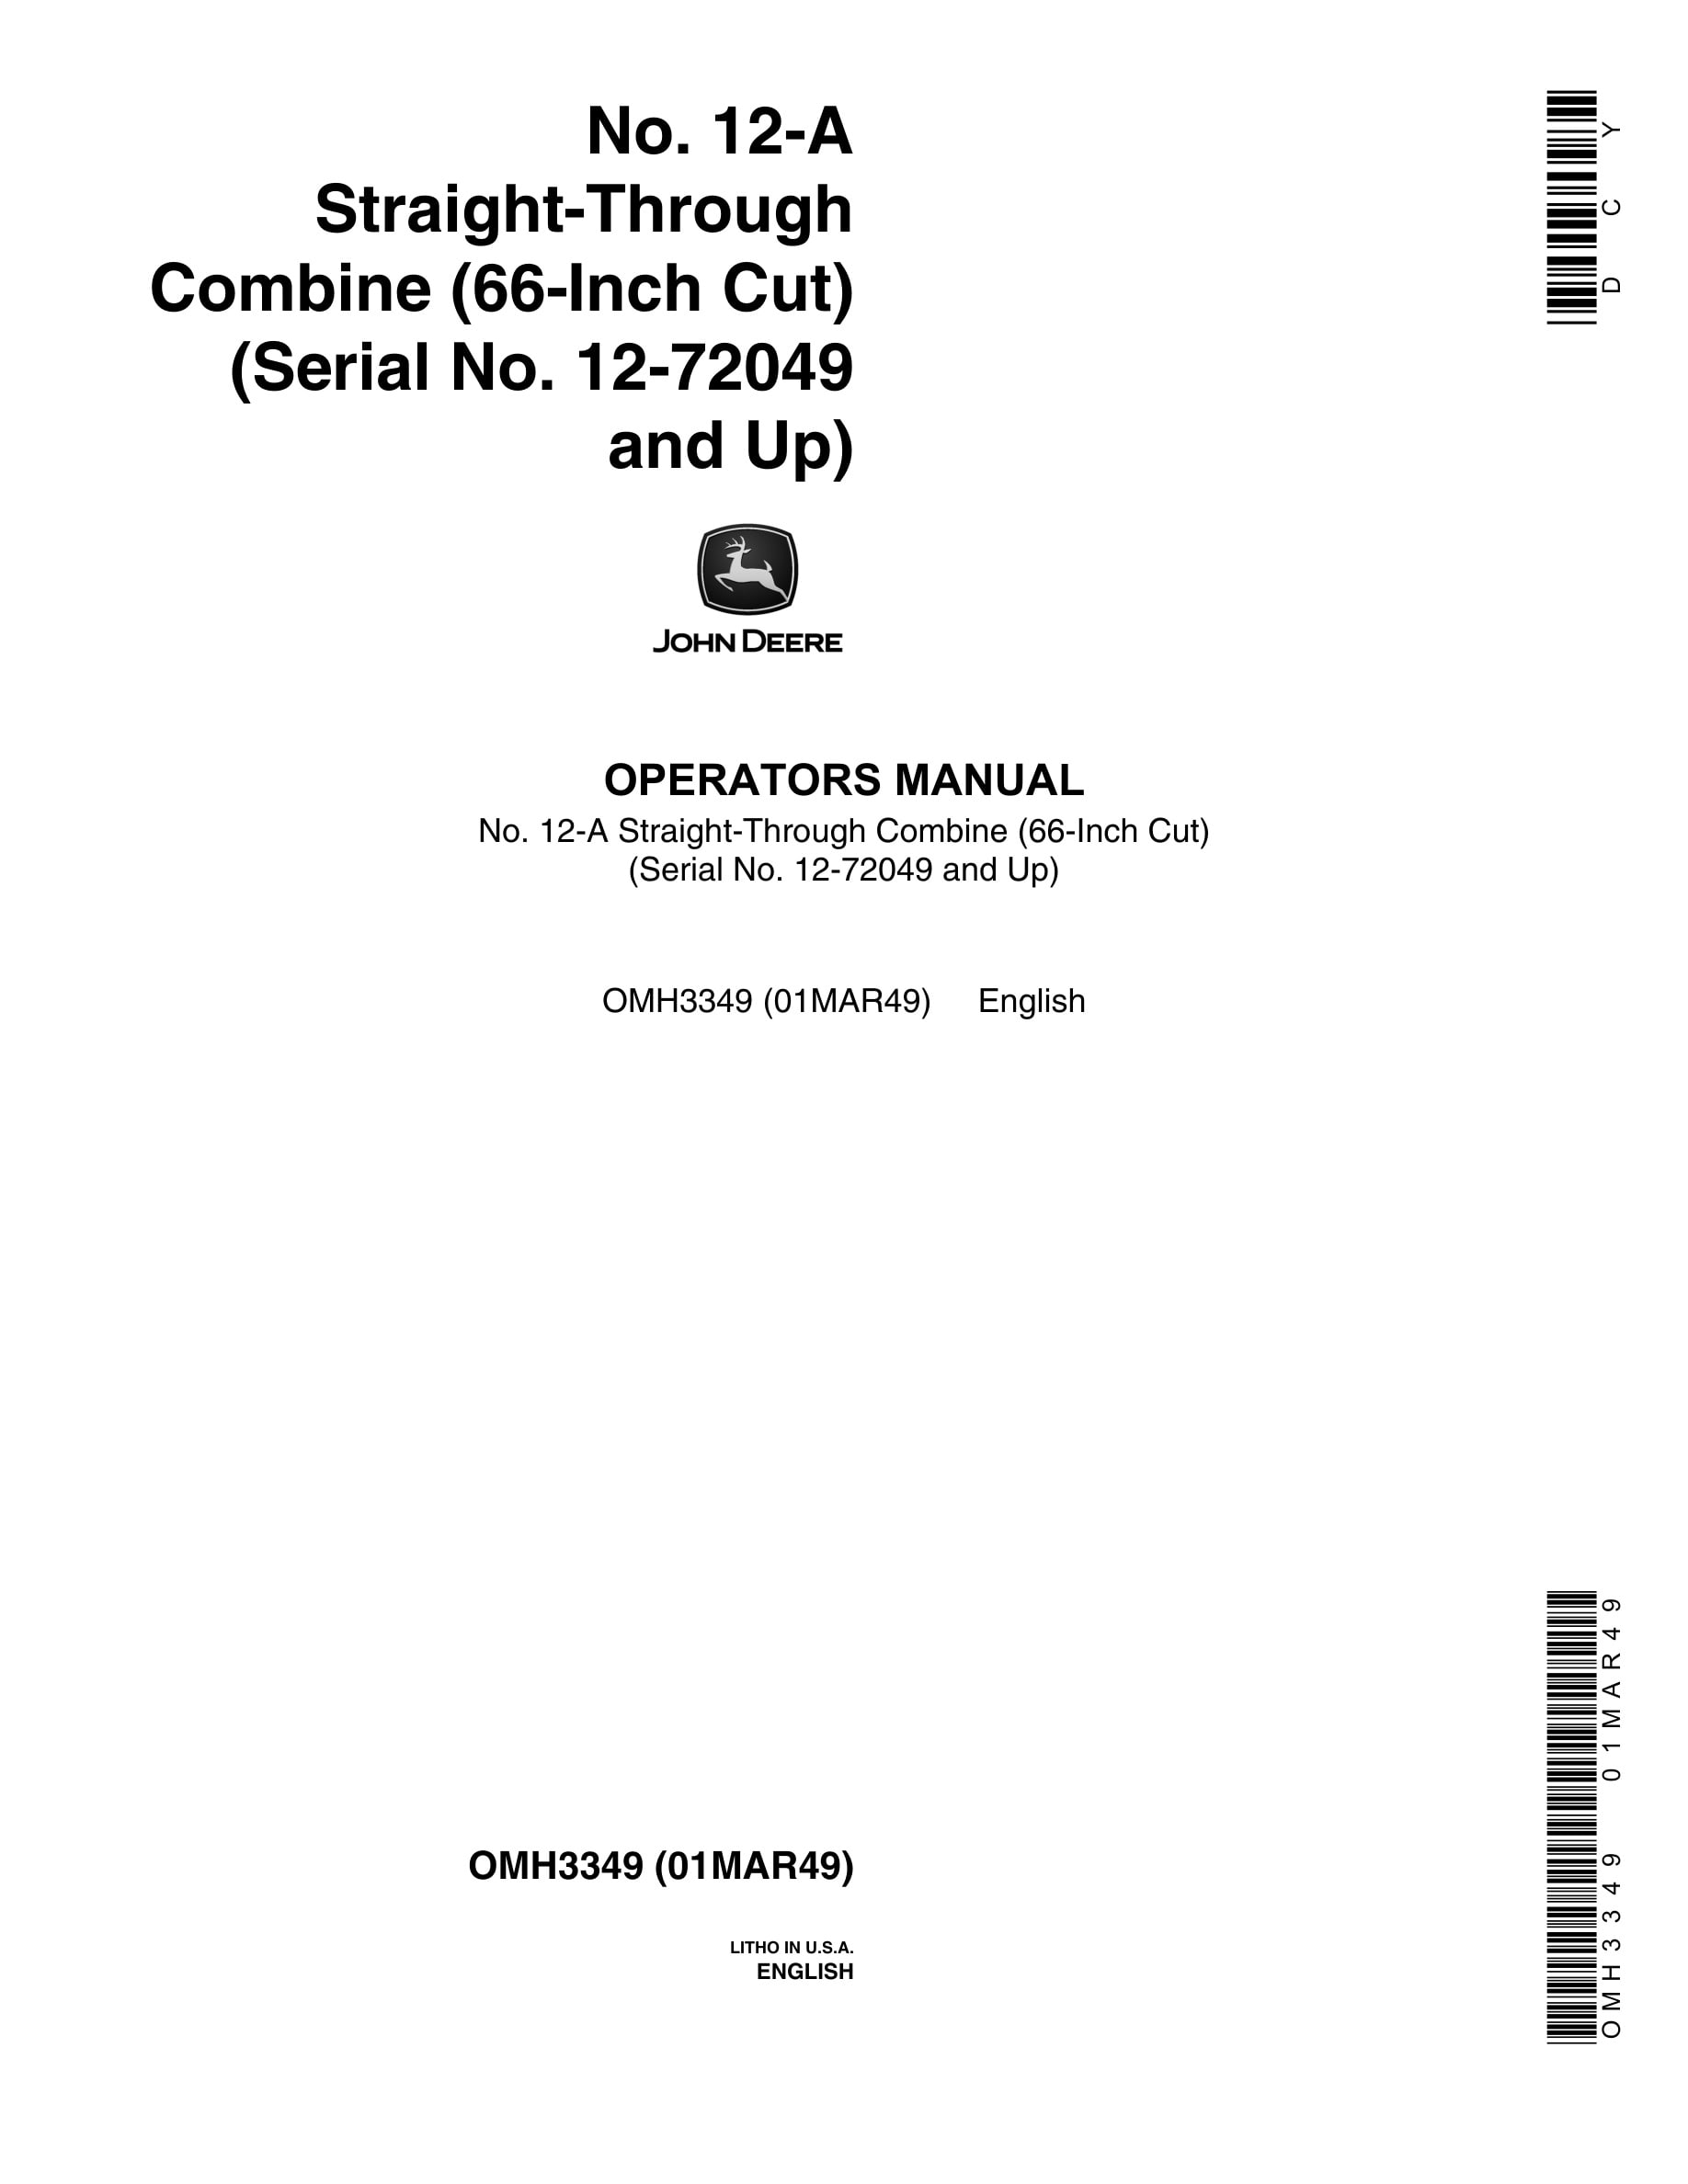 John Deere No. 12-A Straight-Through Combine Operator Manual OMH3349-1